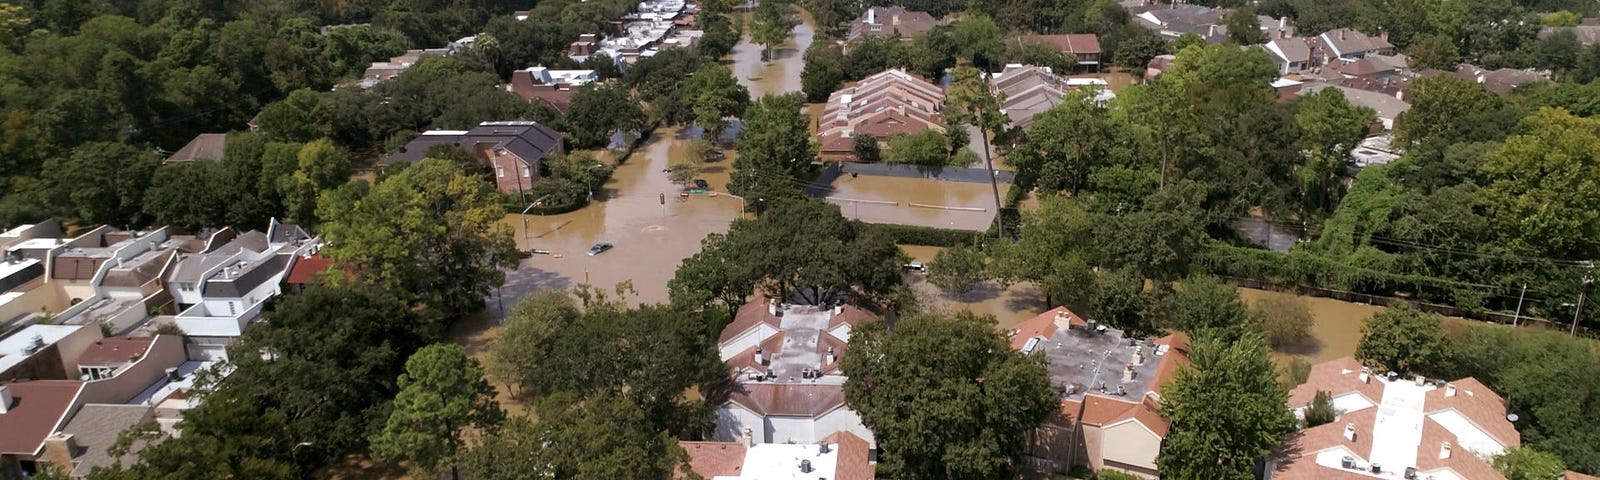 Flooded residential neighborhood in Houston after Hurricane Harvey.